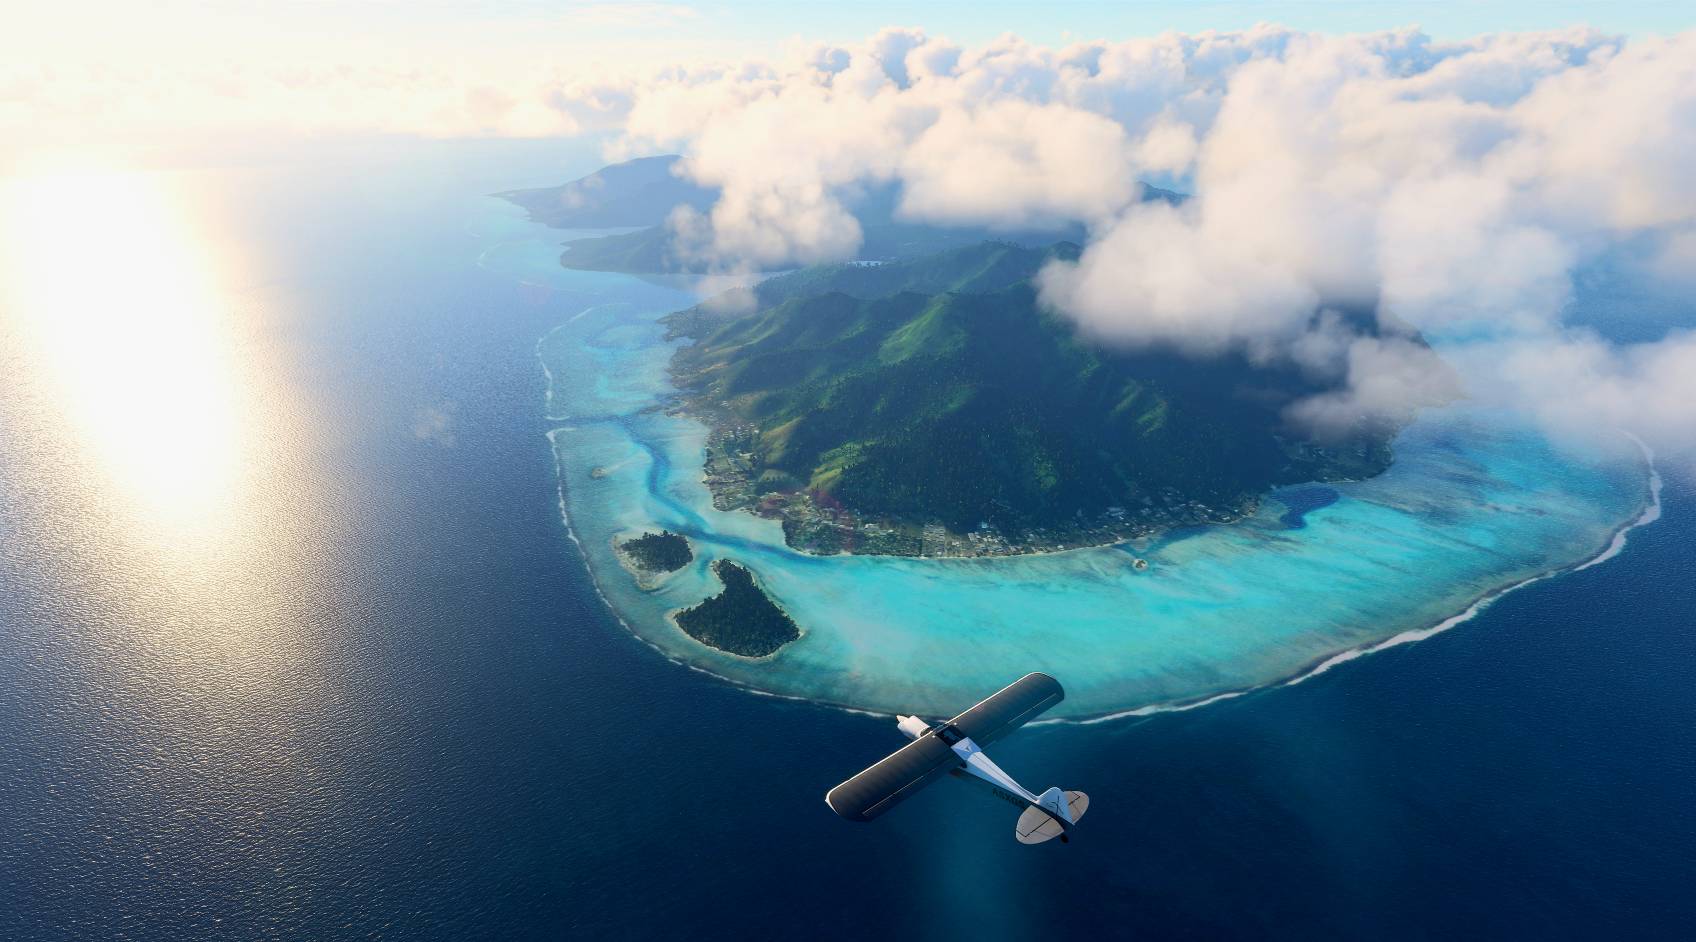 Microsoft Flight Simulator 2020 loading screen showing a small airplane flight over a tropical island